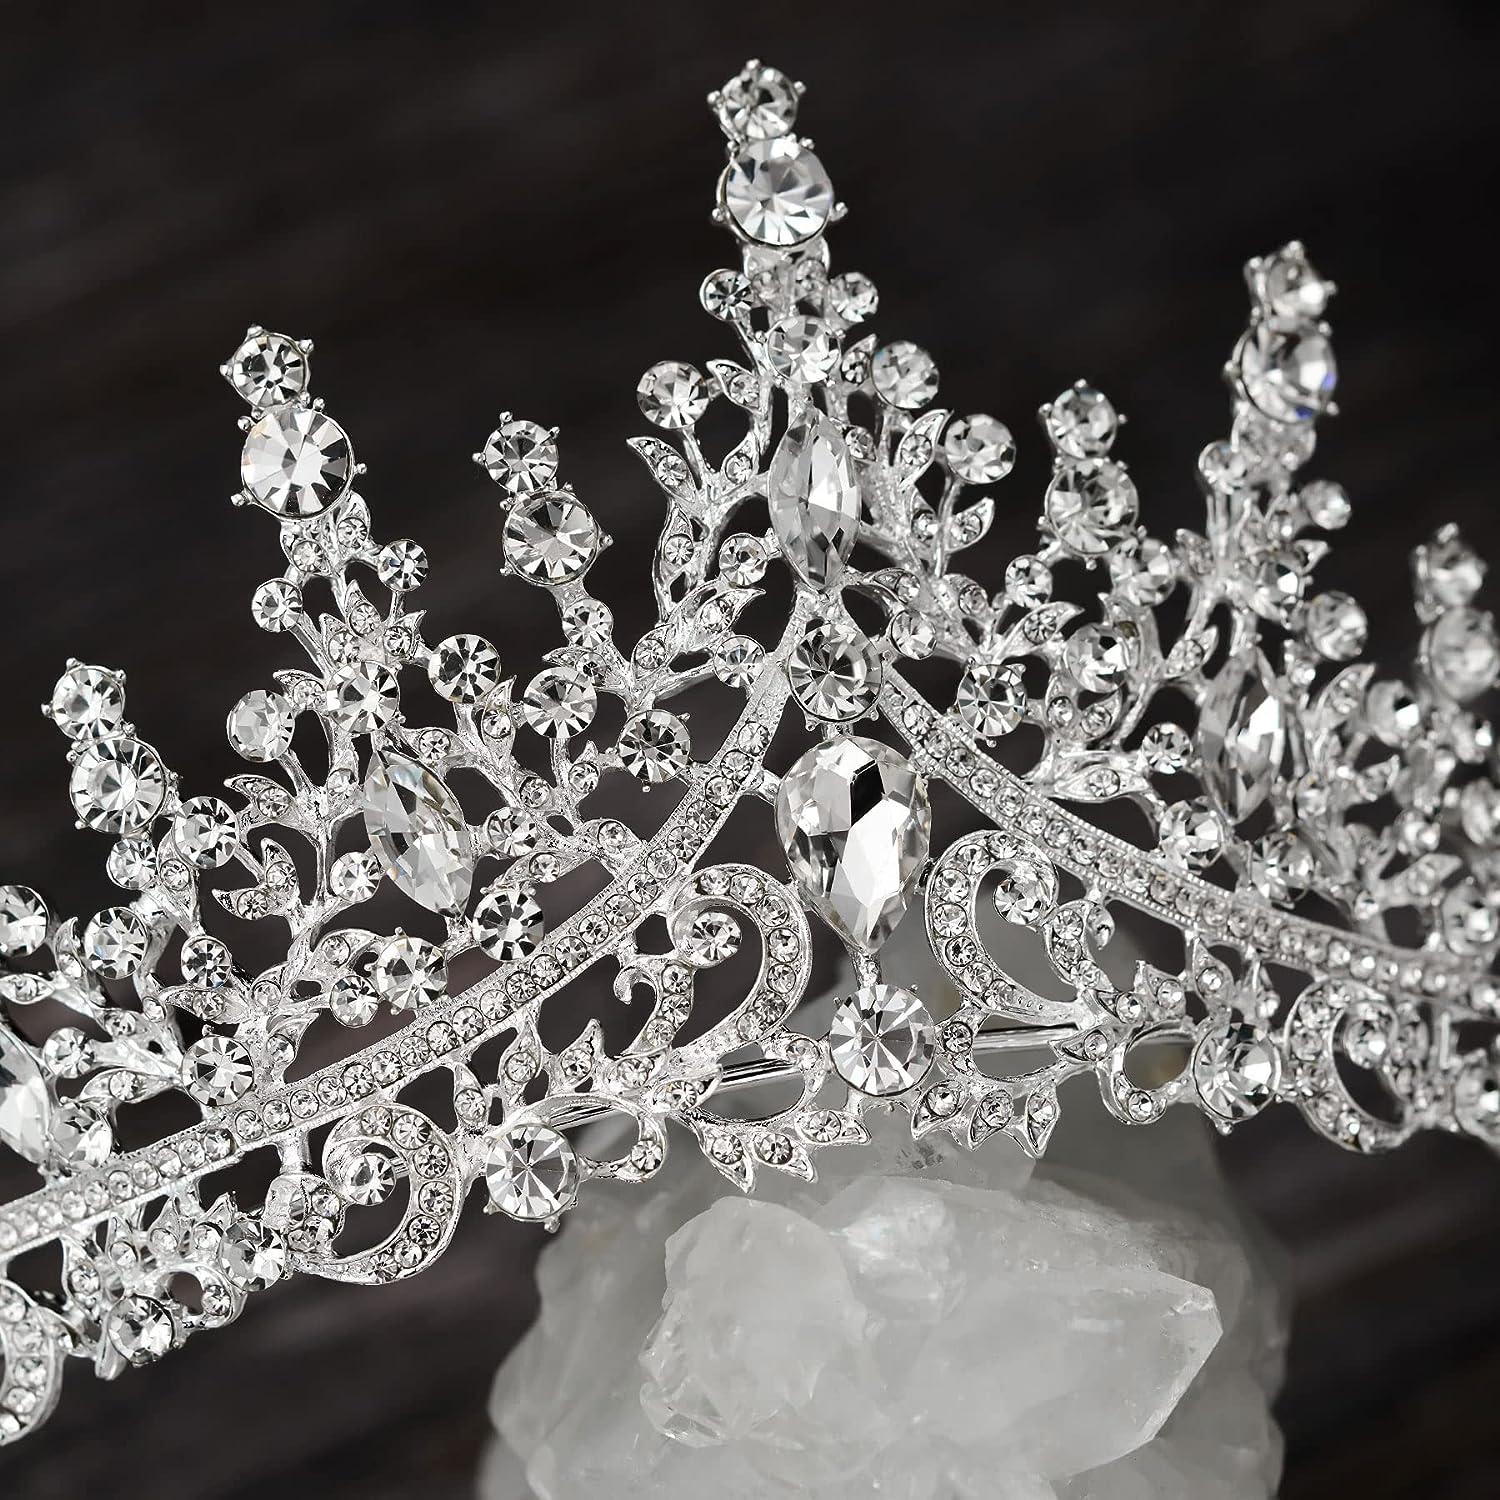 7 oz Silver Crown with Big Rhinestones - Silver